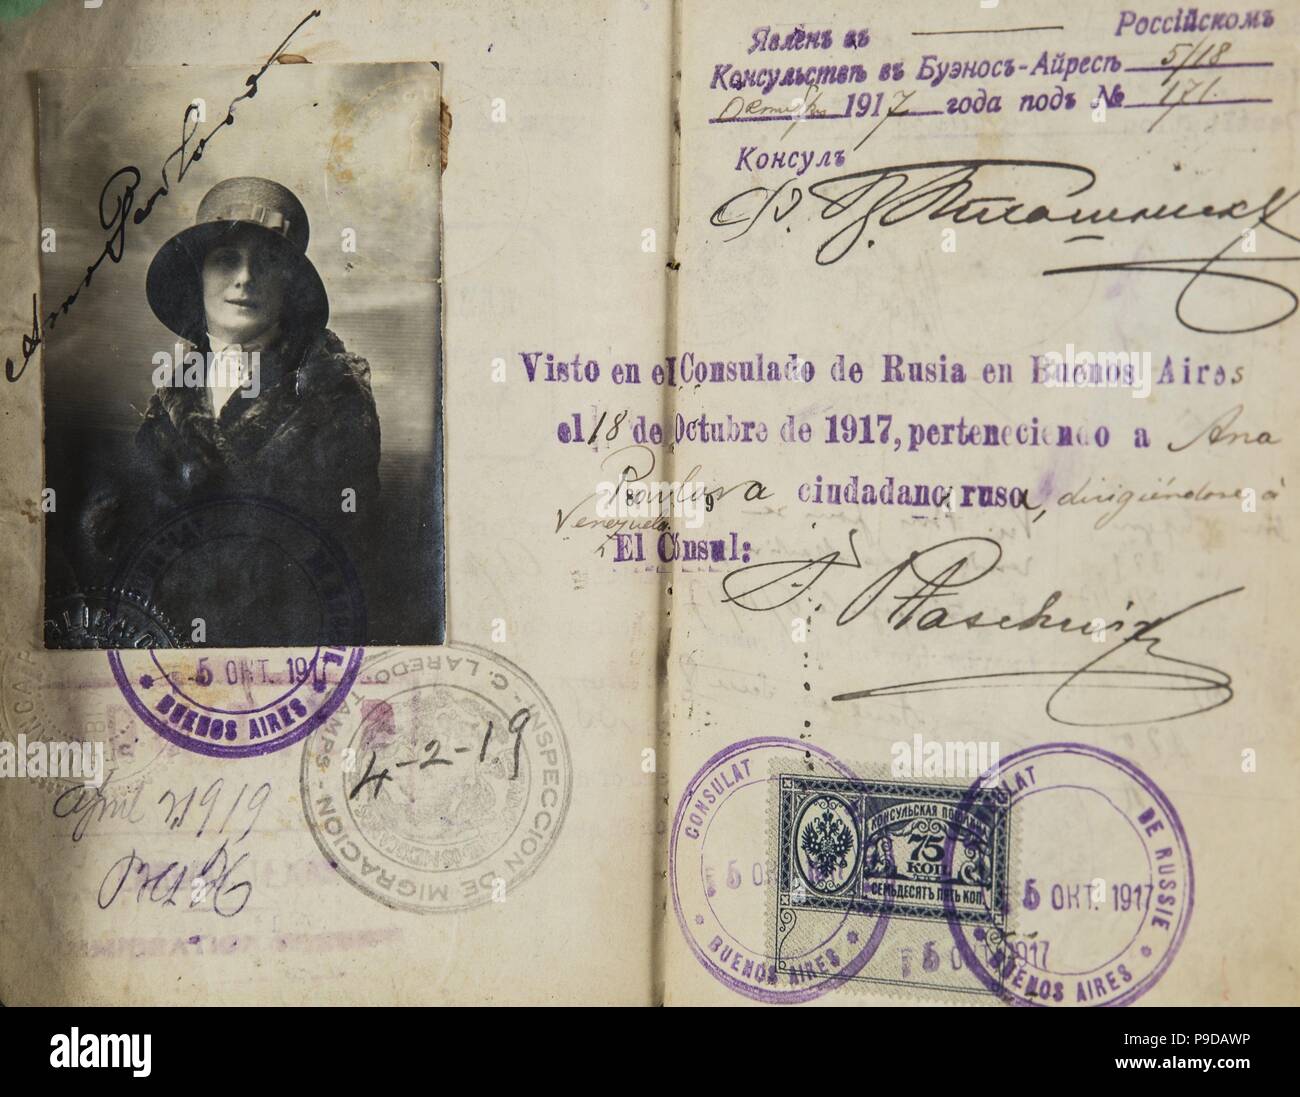 Passport of Anna Pavlova. Museum: PRIVATE COLLECTION. Stock Photo